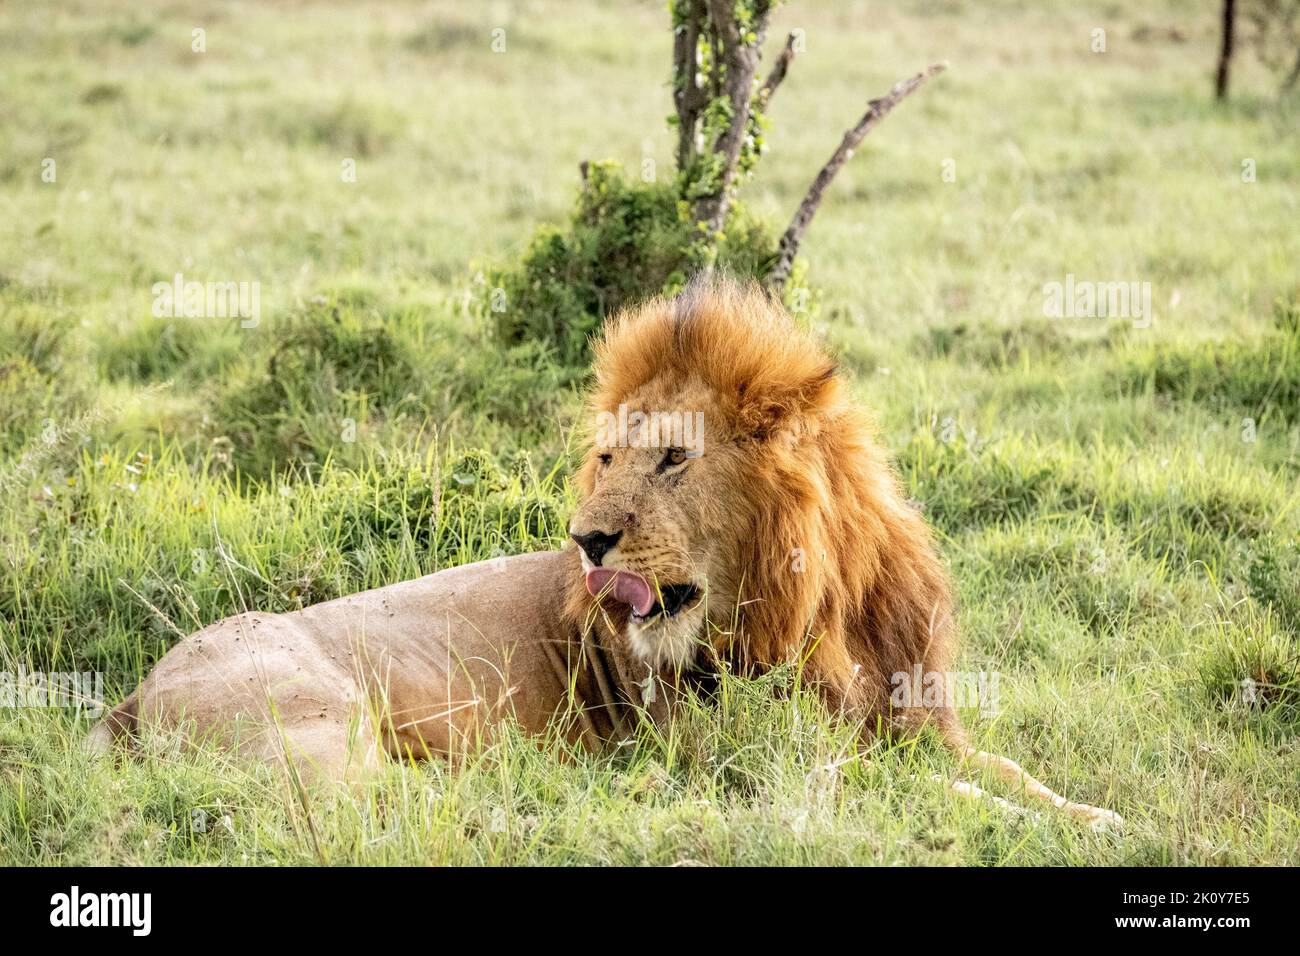 Kenya, Naibosho, 2022-02-12. A lion in the savanna. Photograph by ...